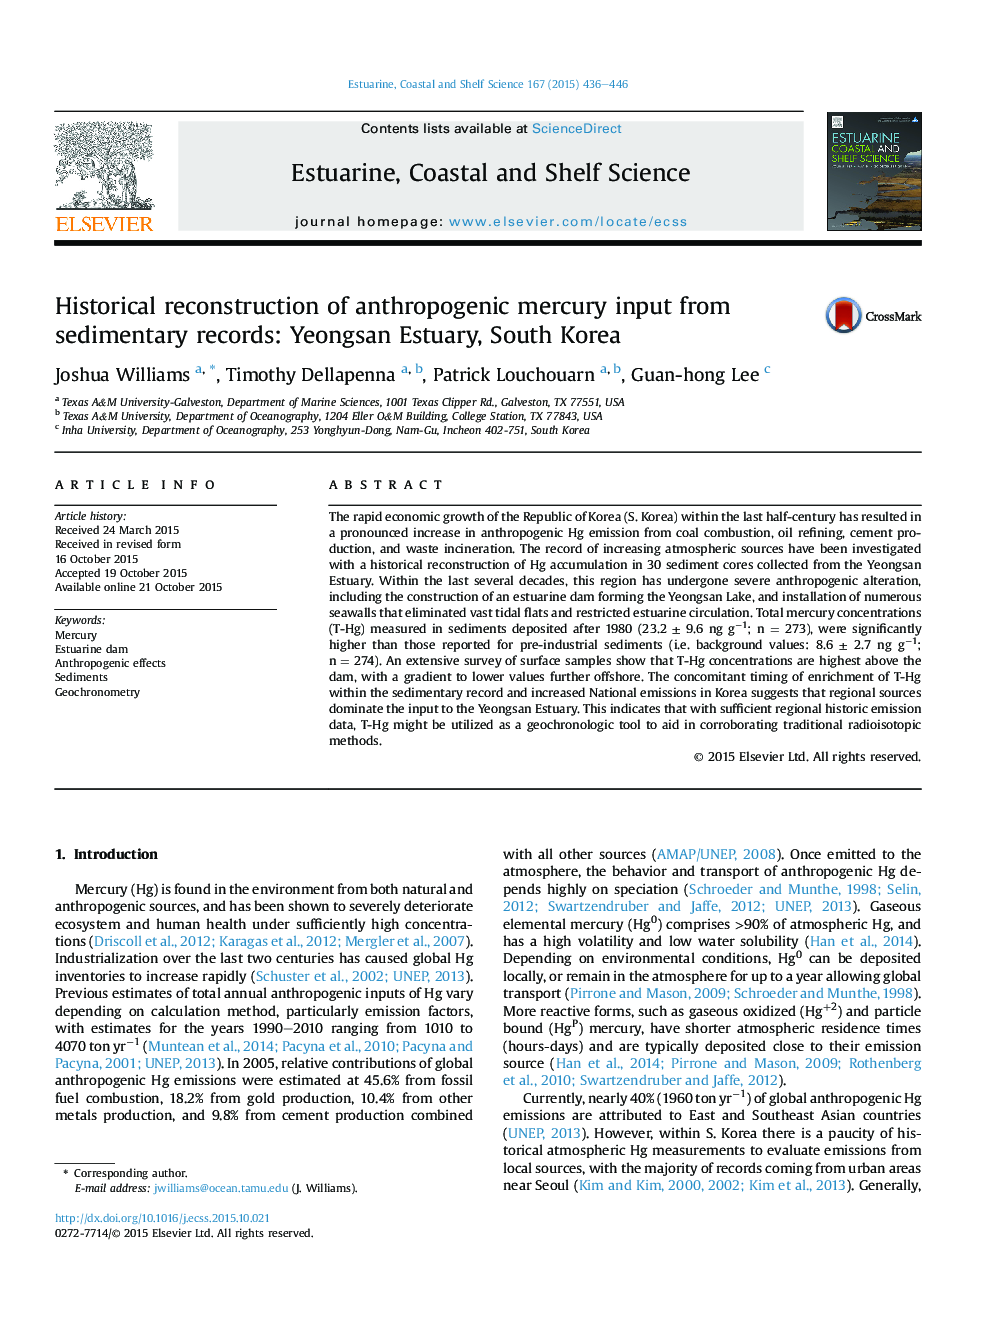 Historical reconstruction of anthropogenic mercury input from sedimentary records: Yeongsan Estuary, South Korea